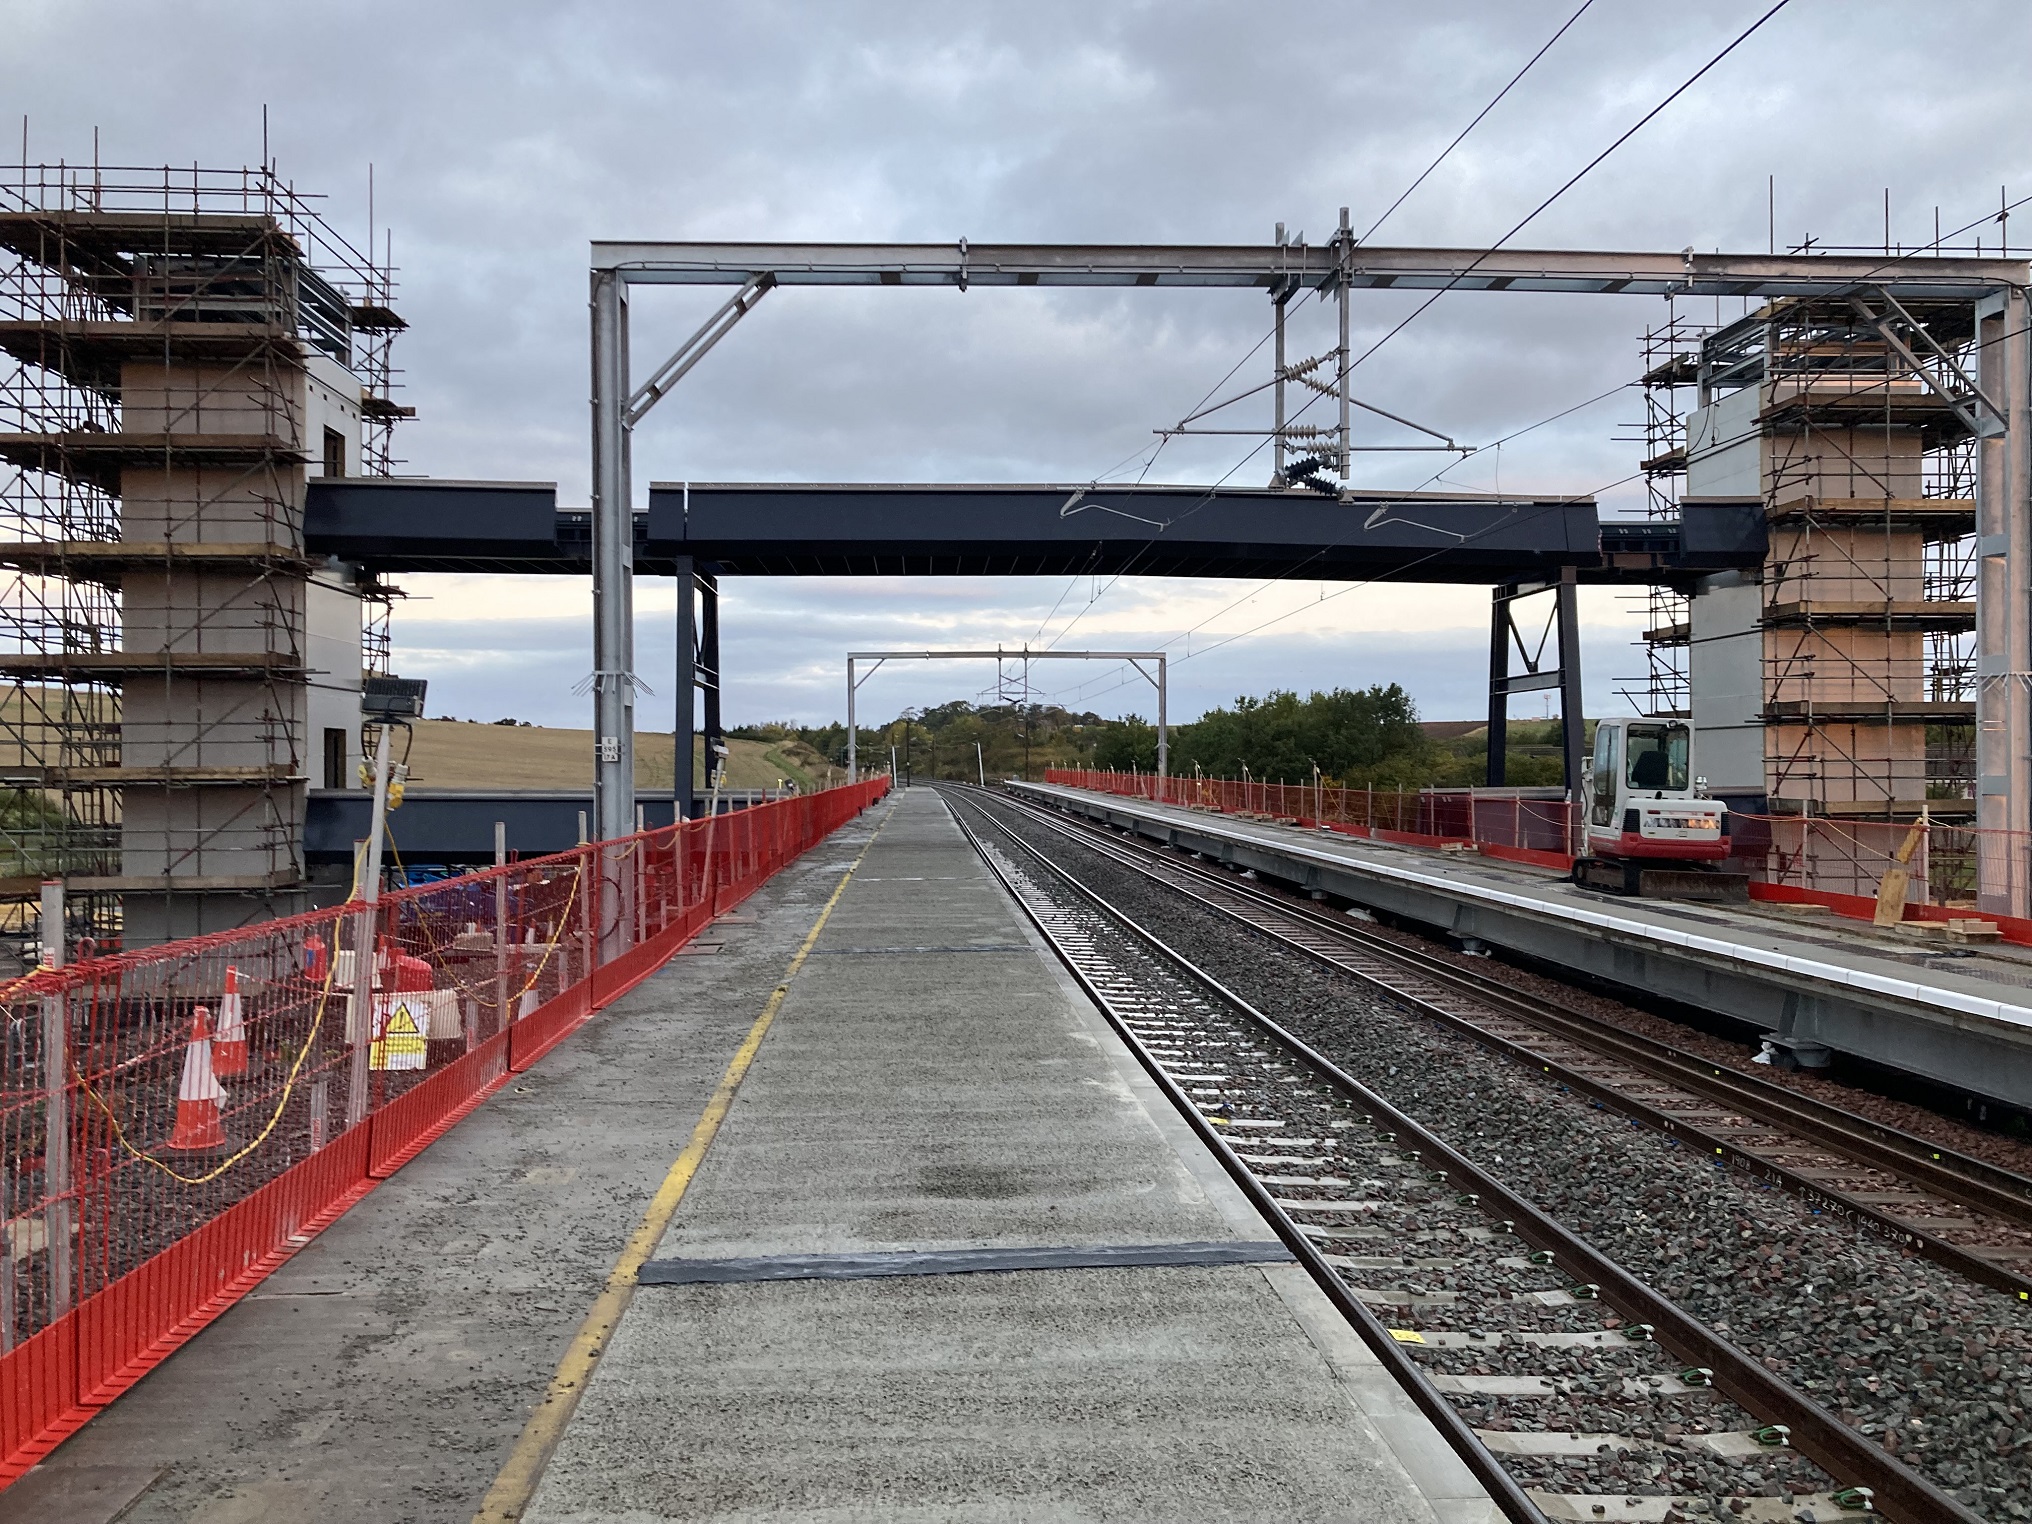 Video: BAM Nuttall installs footbridge at new East Linton station